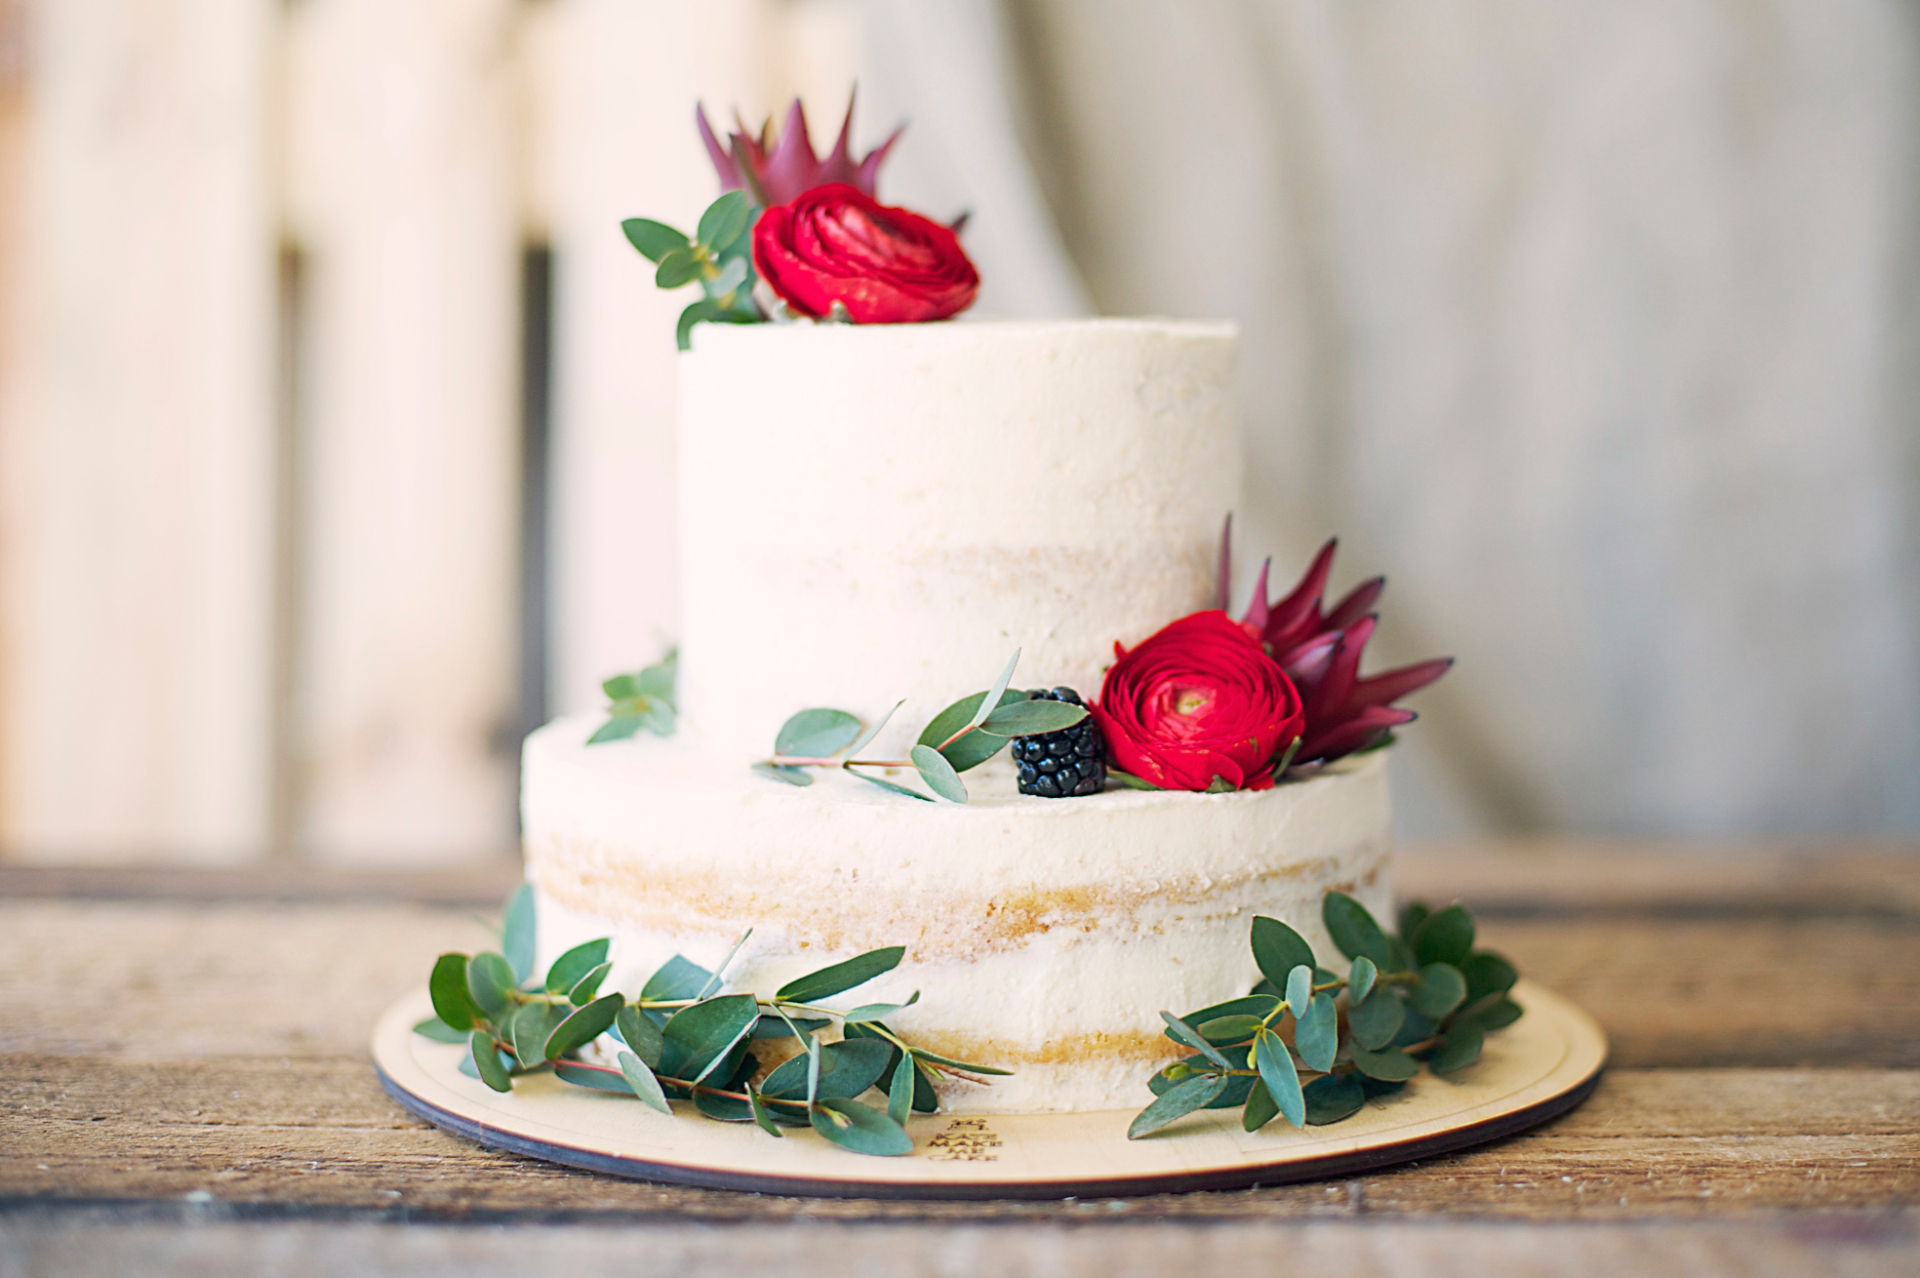  Wedding Cake - Planning A Wedding On A Budget